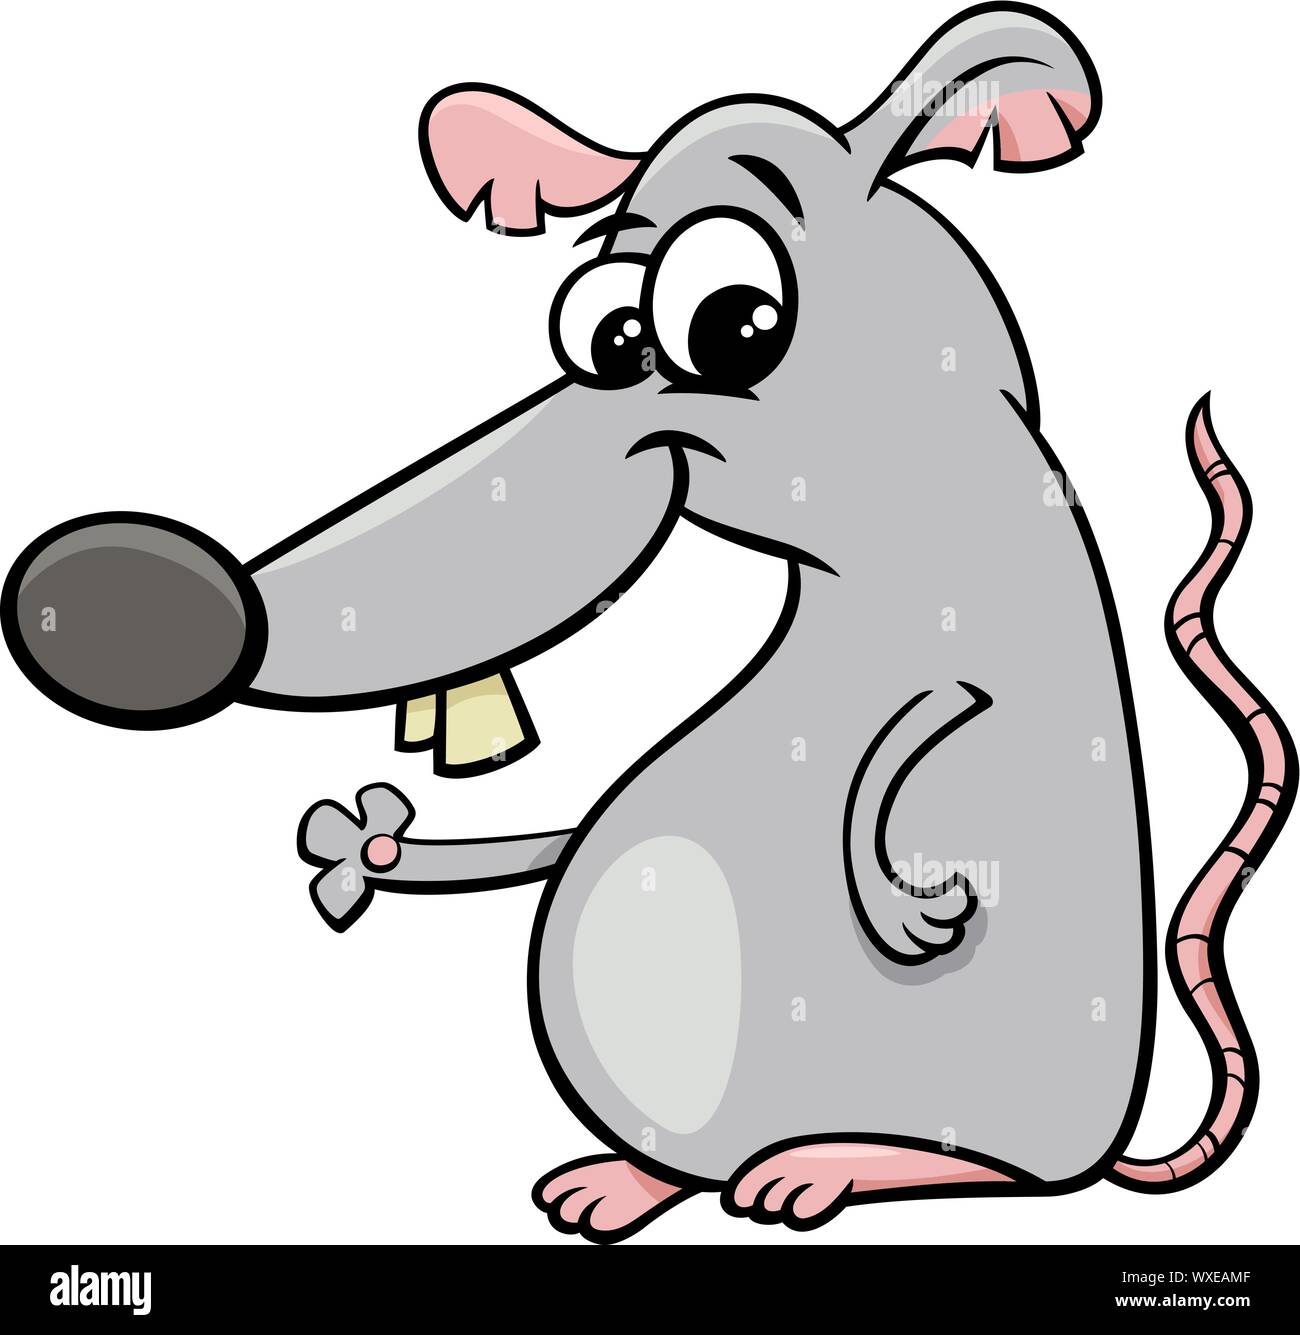 Caricatura de rata fotografías e imágenes de alta resolución - Alamy